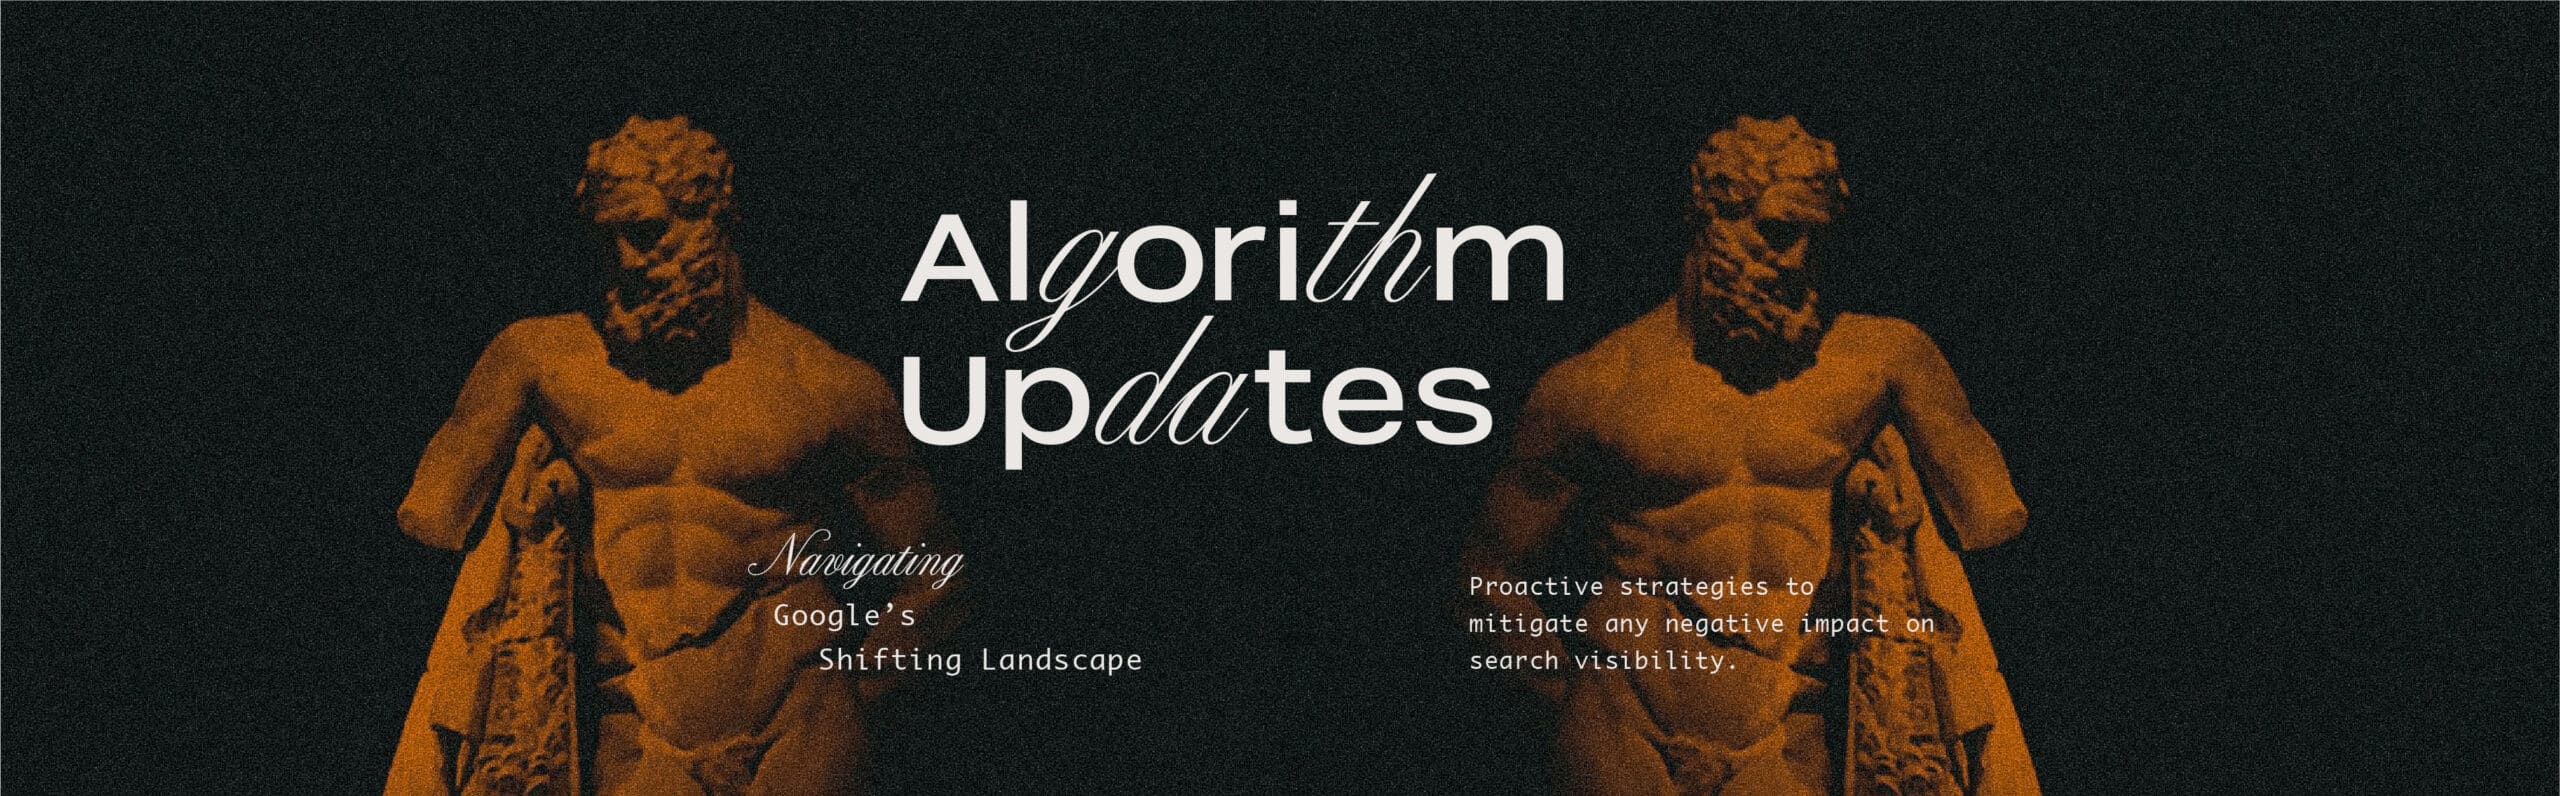 Algorithm Updates: Navigating Google's Shifting Landscape - Astute Communications